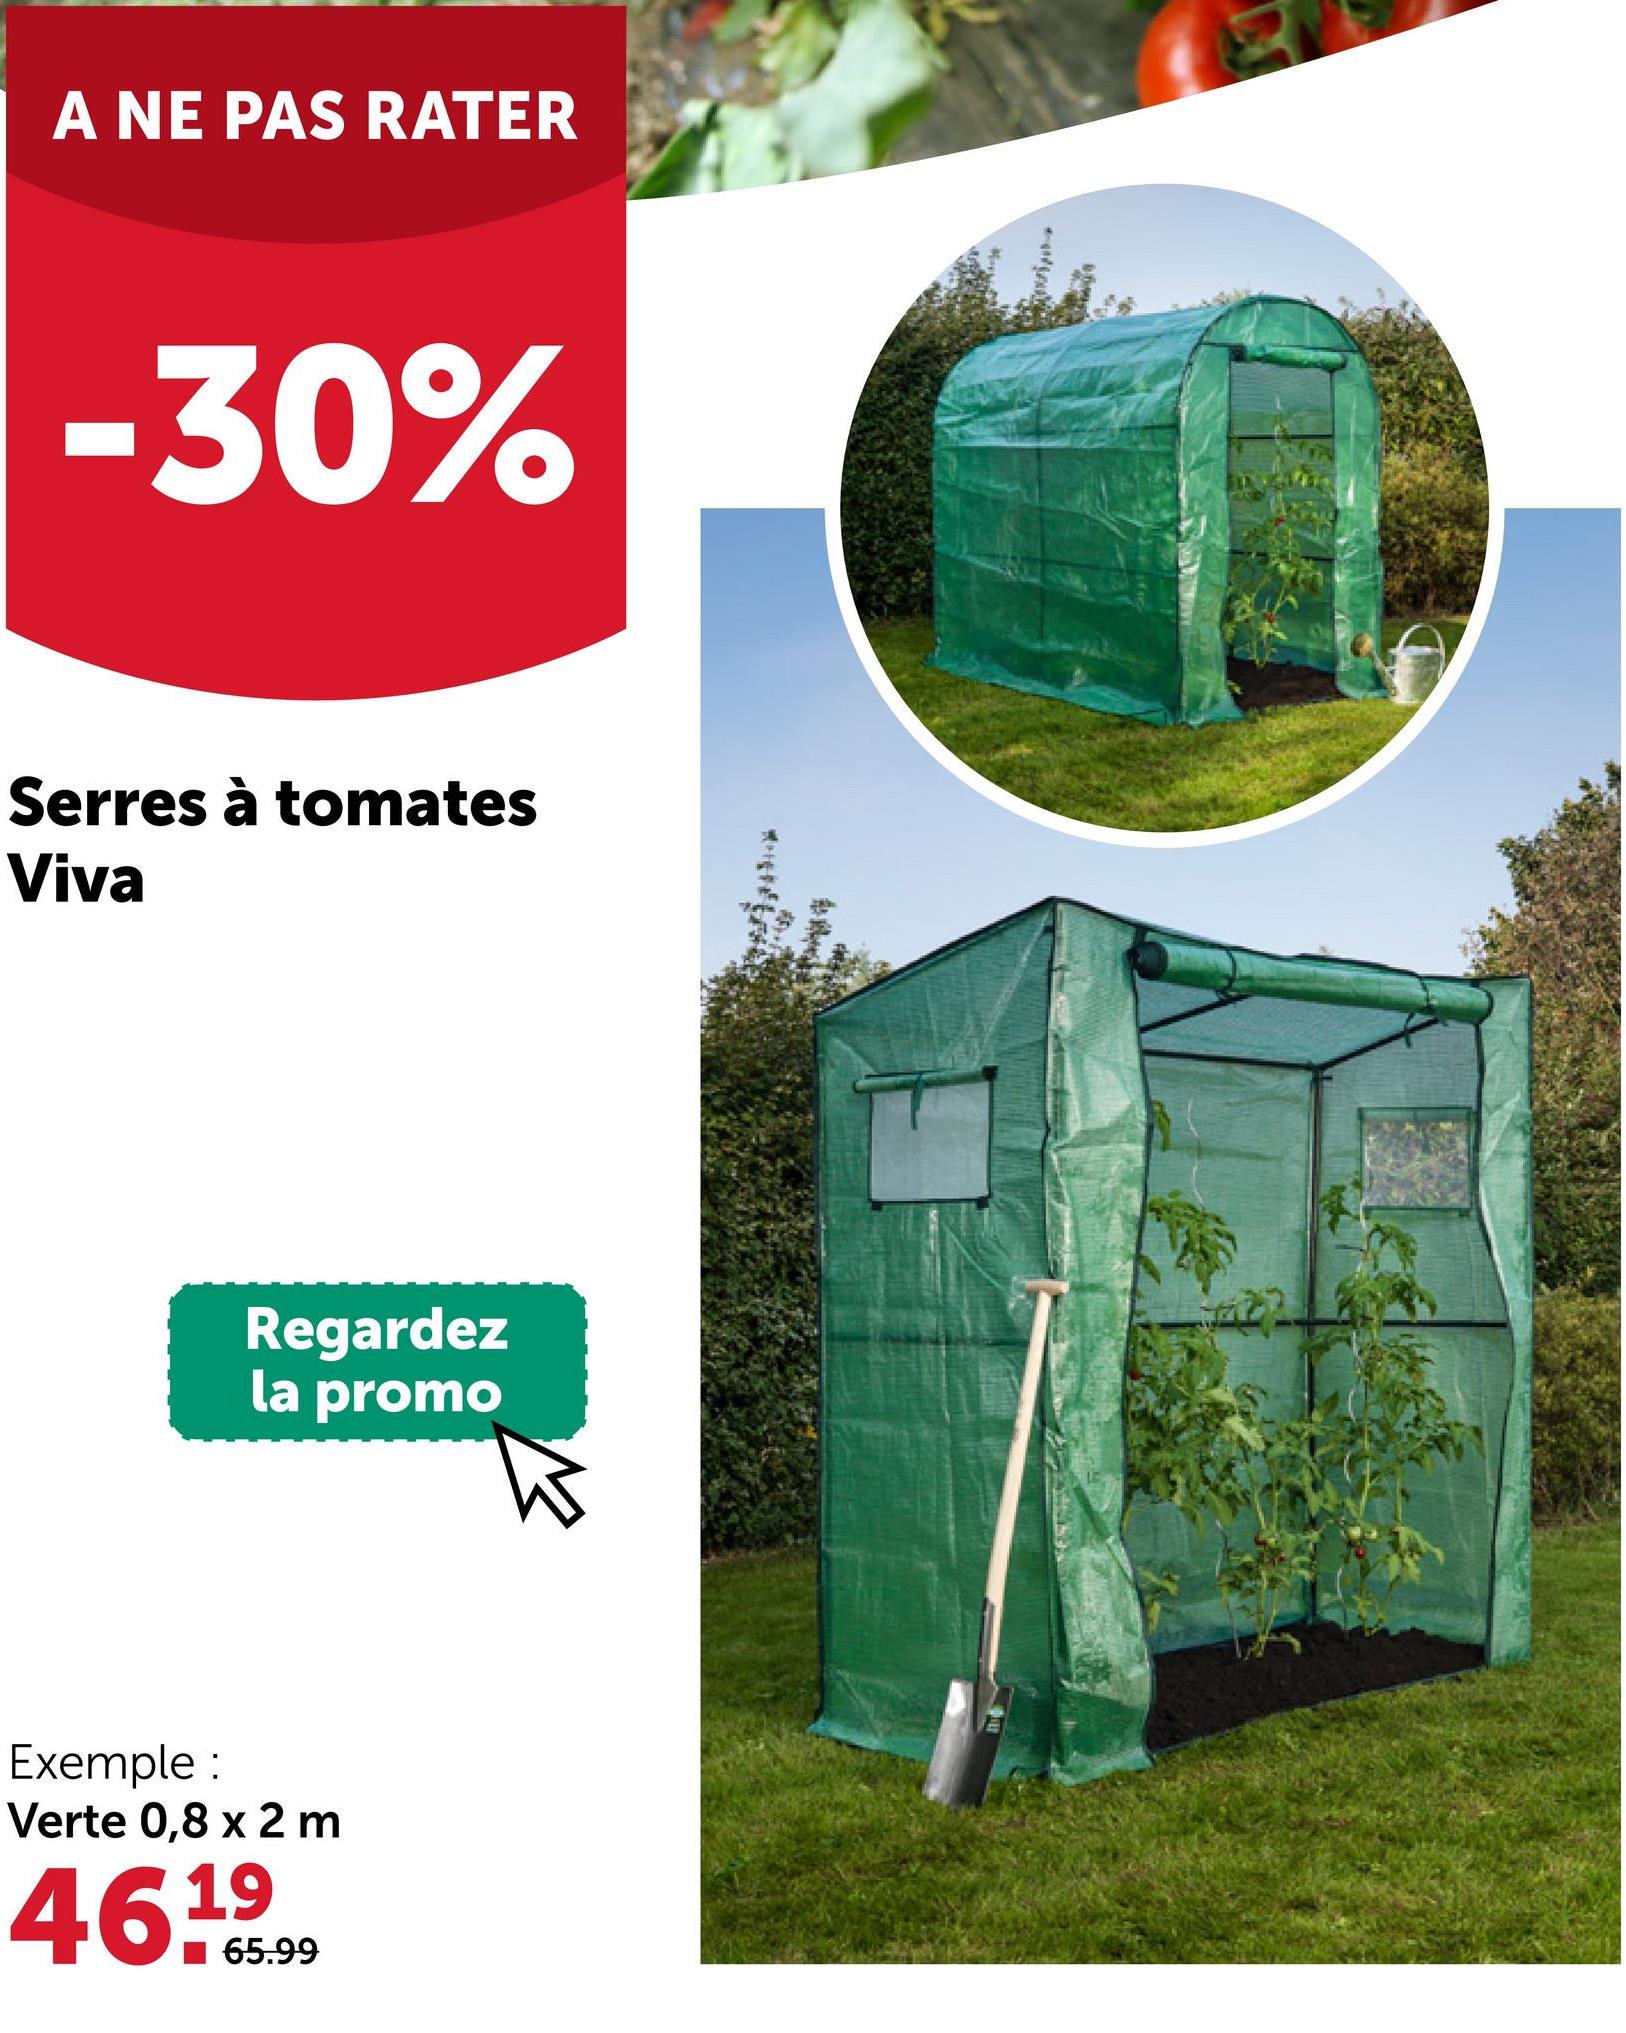 A NE PAS RATER
-30%
Serres à tomates
Viva
Regardez
la promo
Exemple :
Verte 0,8 x 2 m
46.65.99